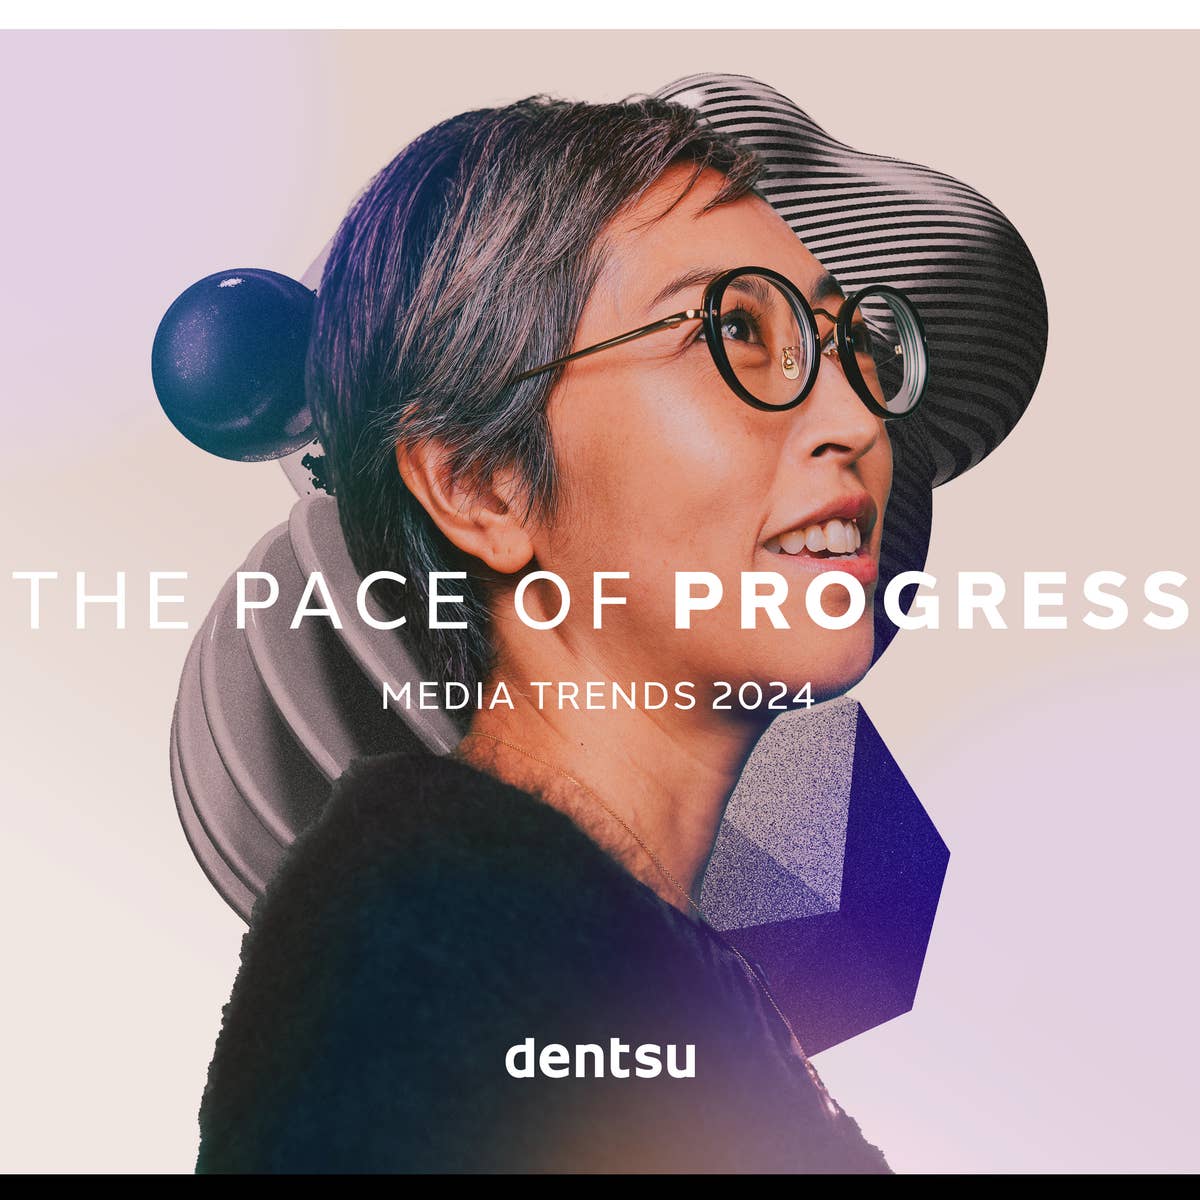 The Pace of Progress | dentsu 2024 Media Trends